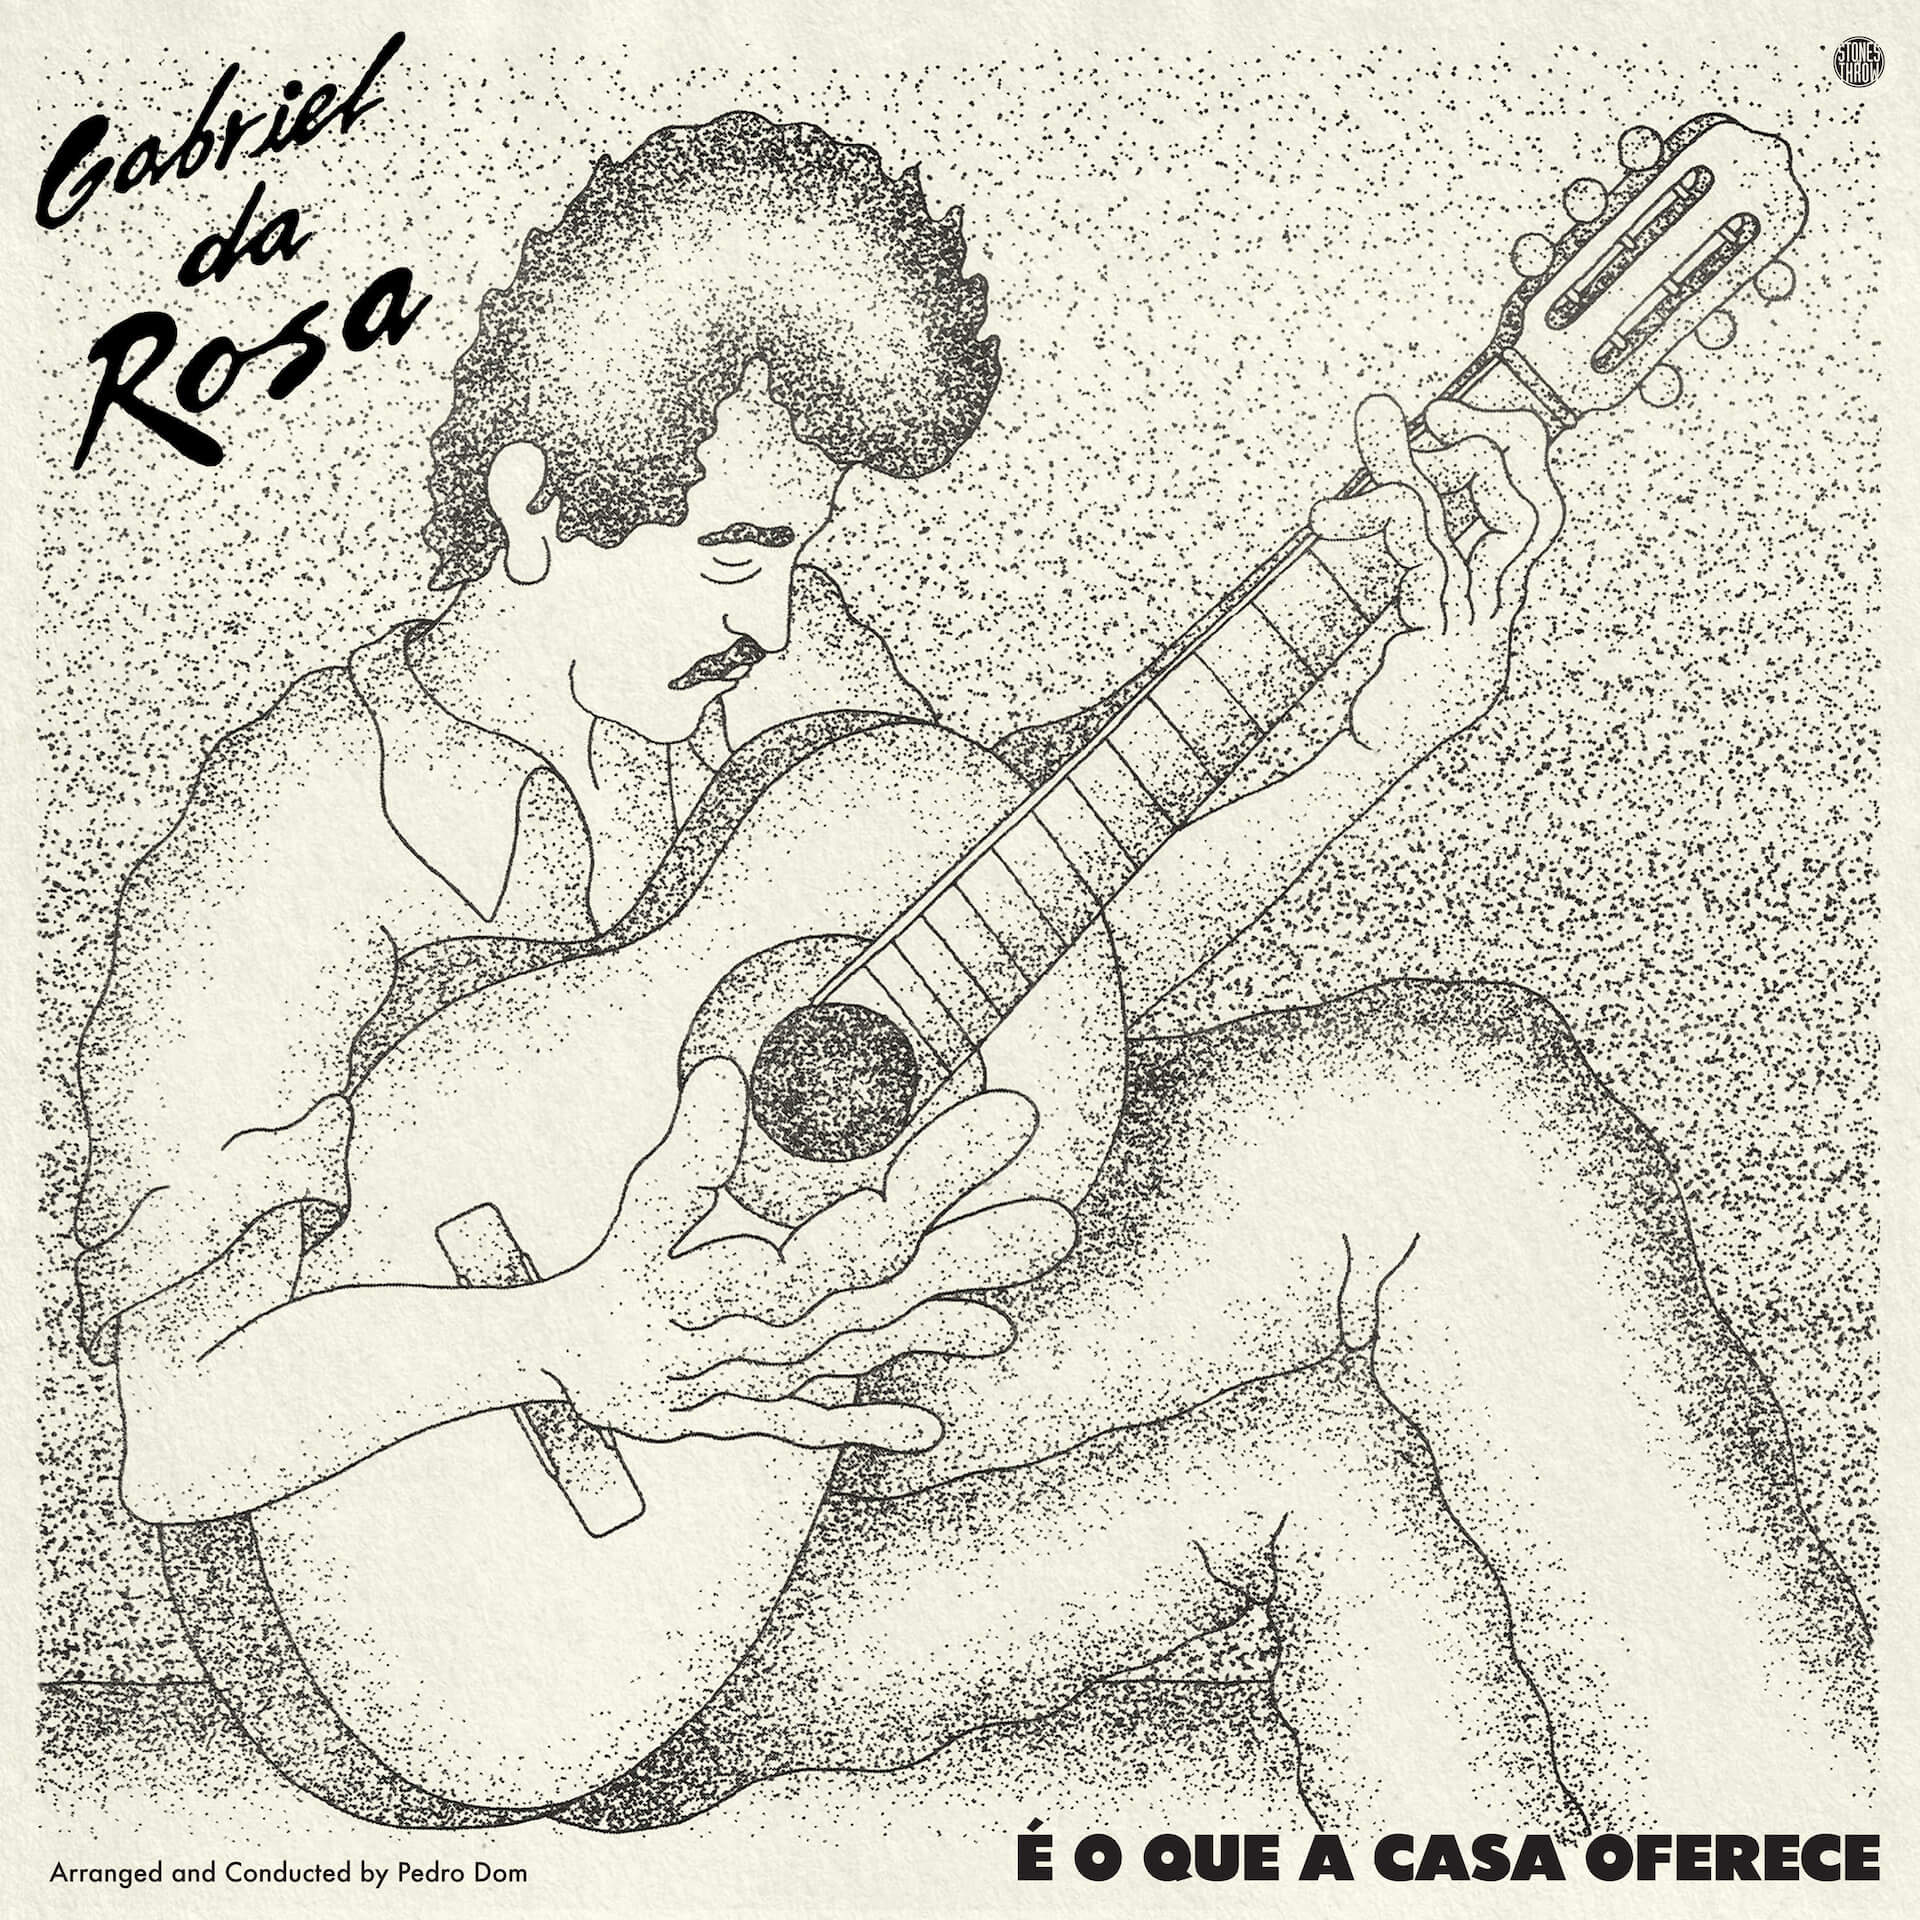 Stones Throwよりレーベル初ブラジリアンアーティスト・Gabriel da Rosaのデビューアルバム『É o que a casa oferece』がリリース music230220-gabriel-de-rosa2